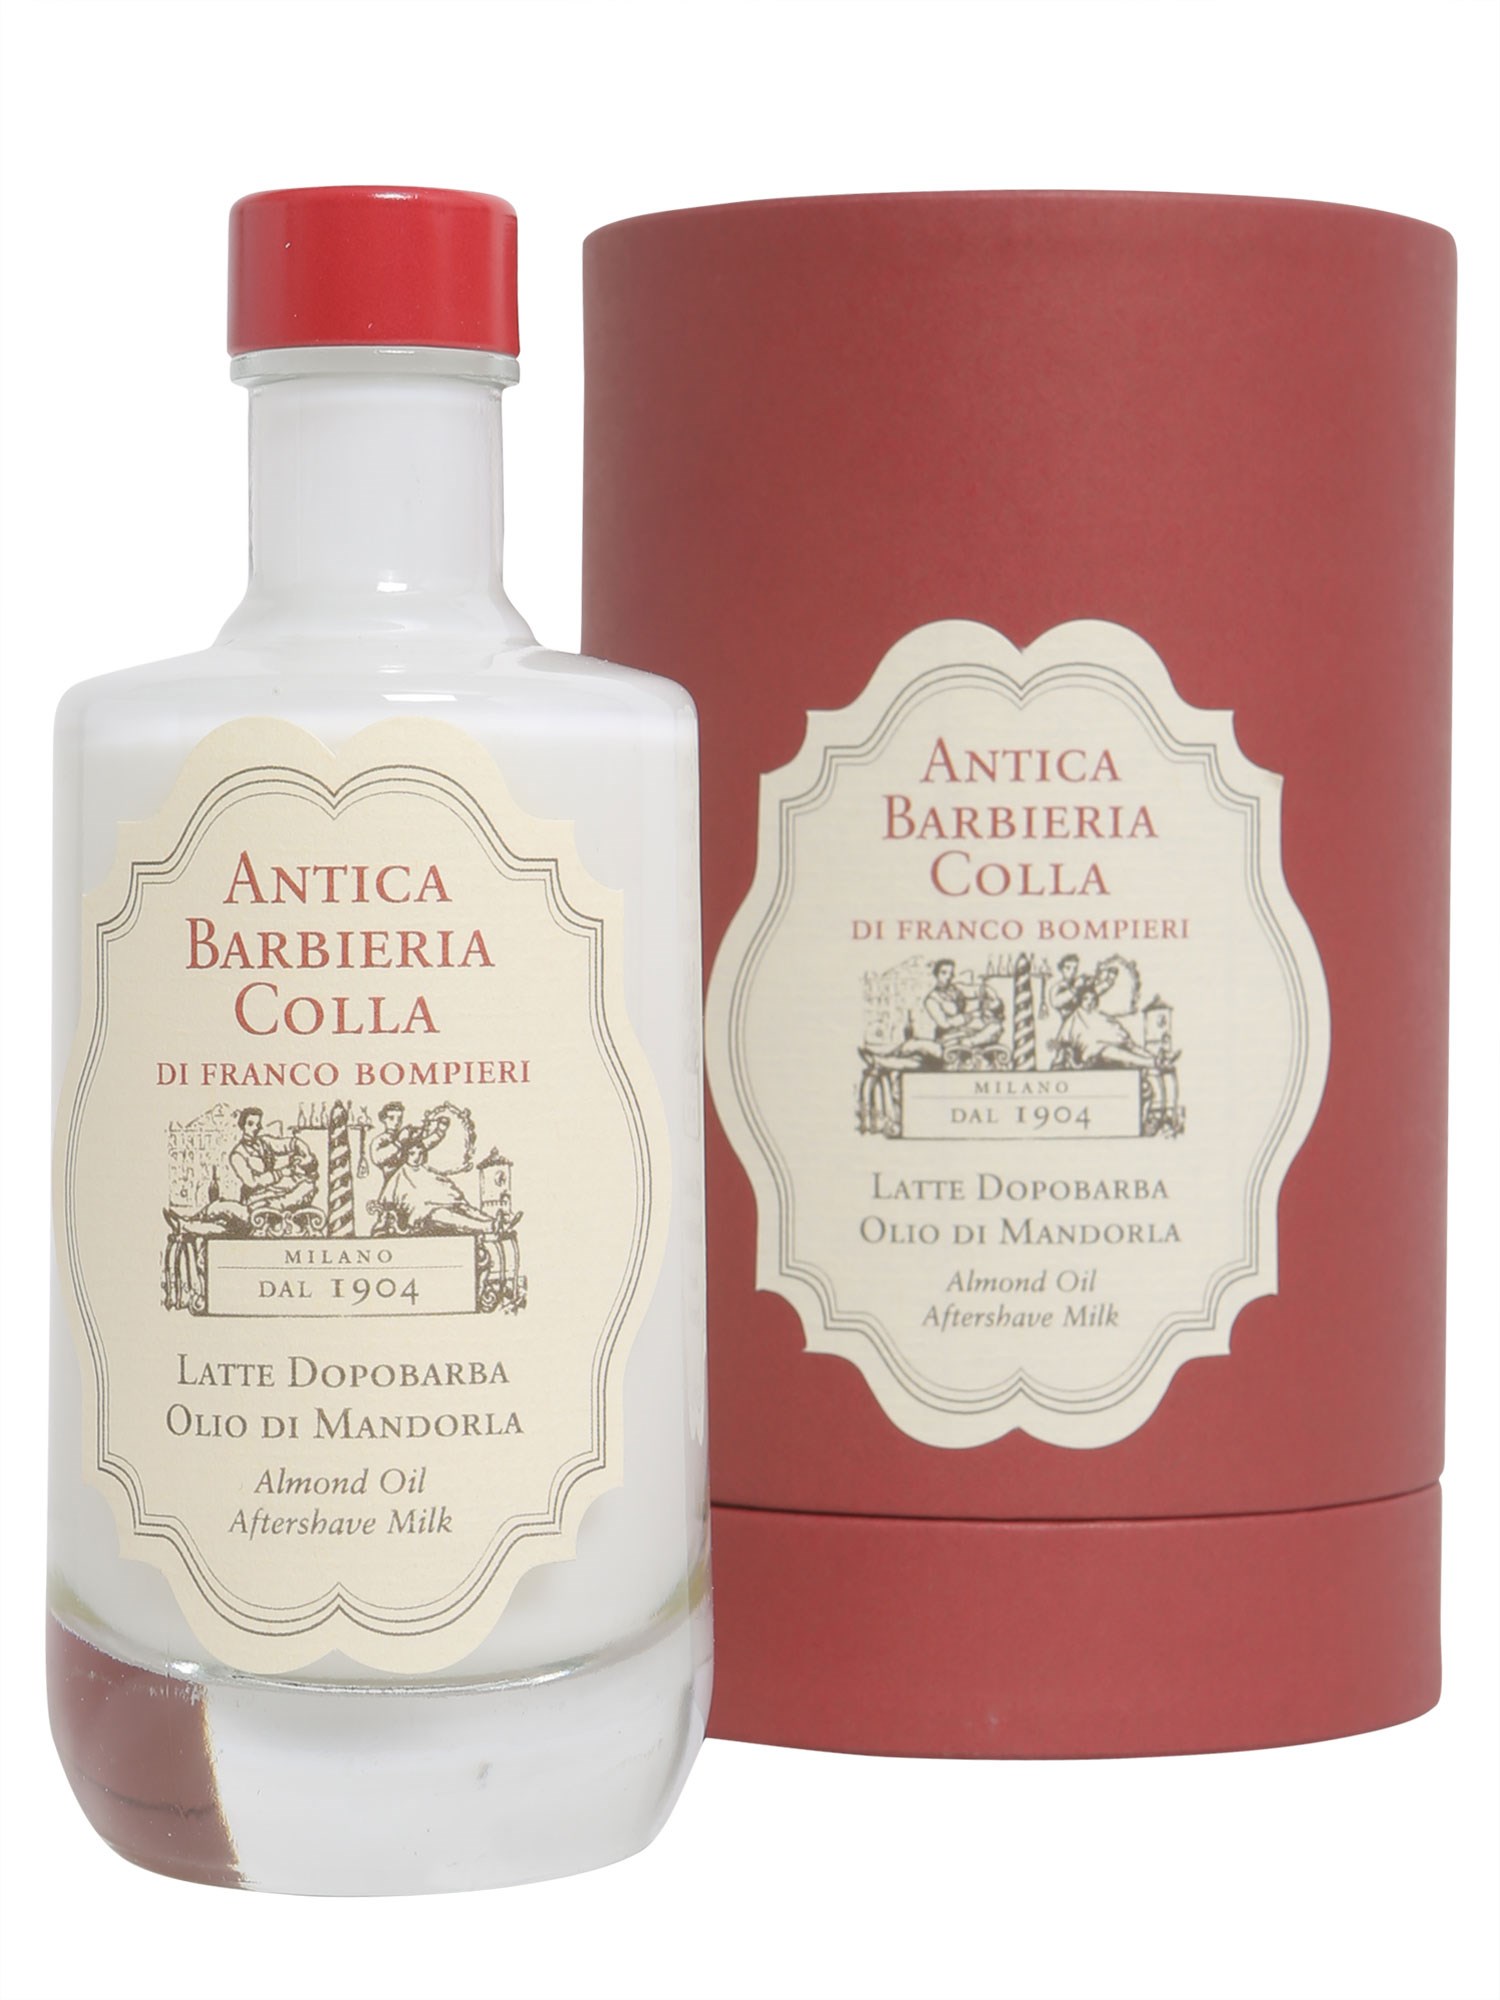 antica barbieria colla almond oil aftershave milk